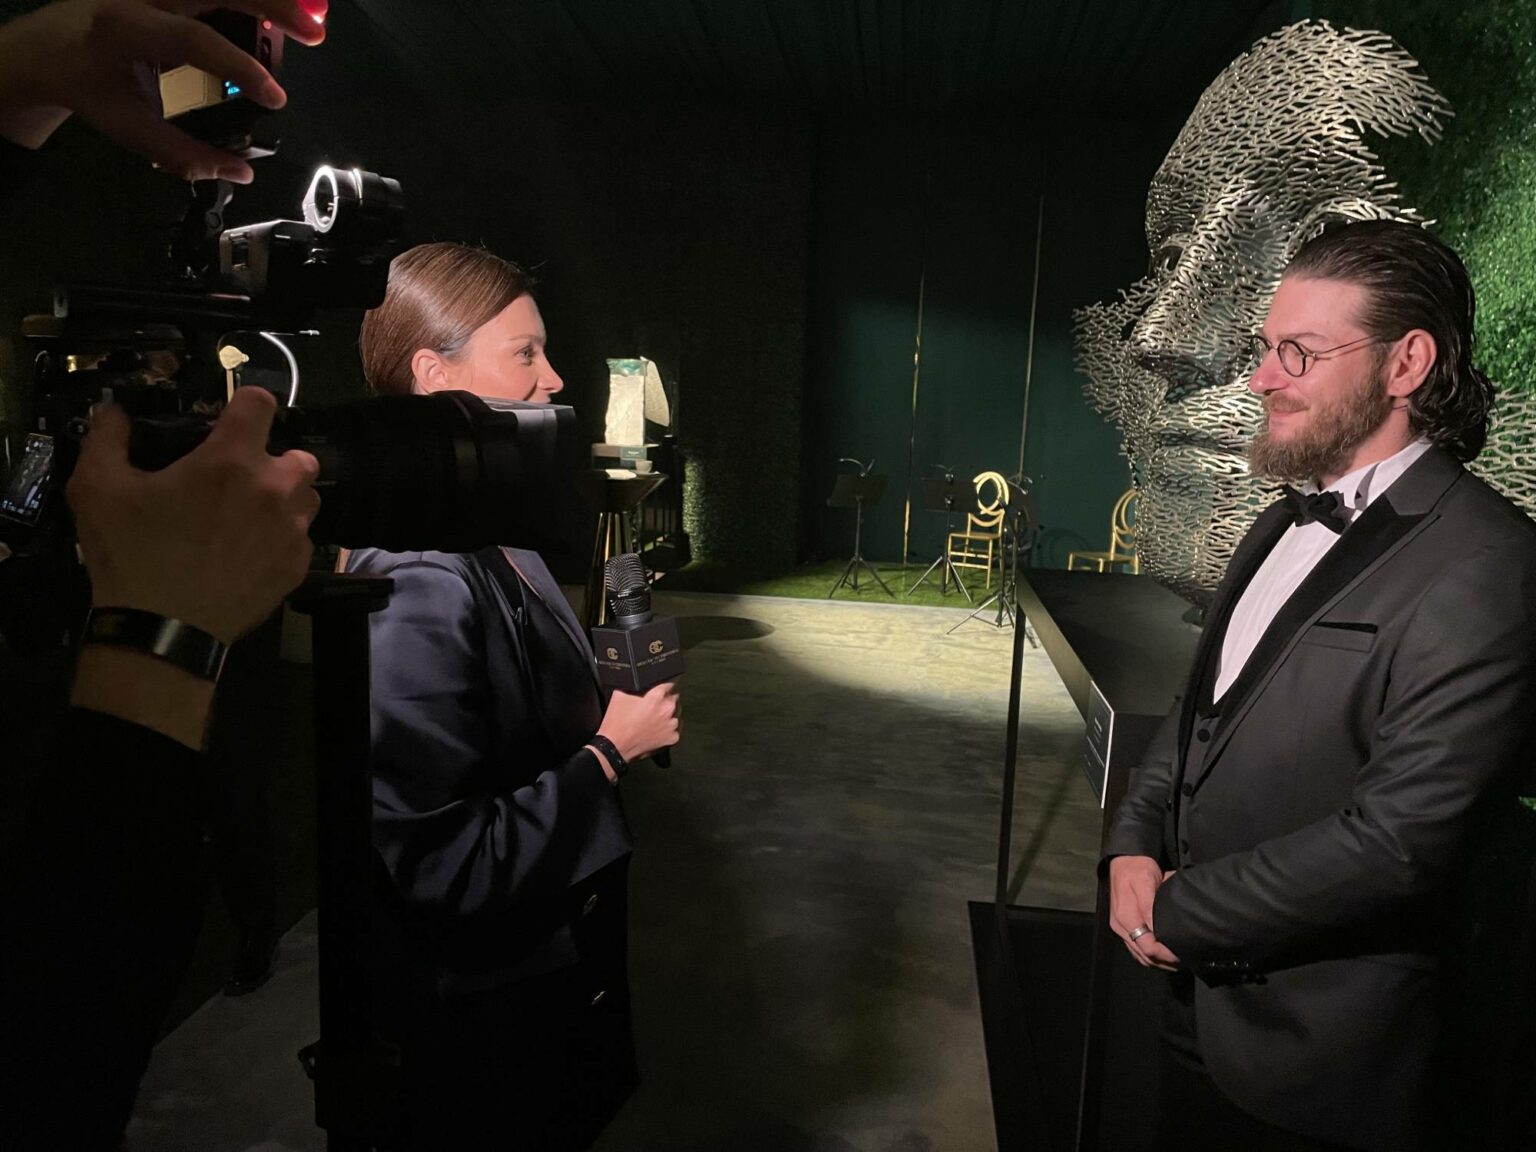 Sculpture "Iron Maiden" by Croatian artist Nikola Vudrag sells for an incredible € 712,000